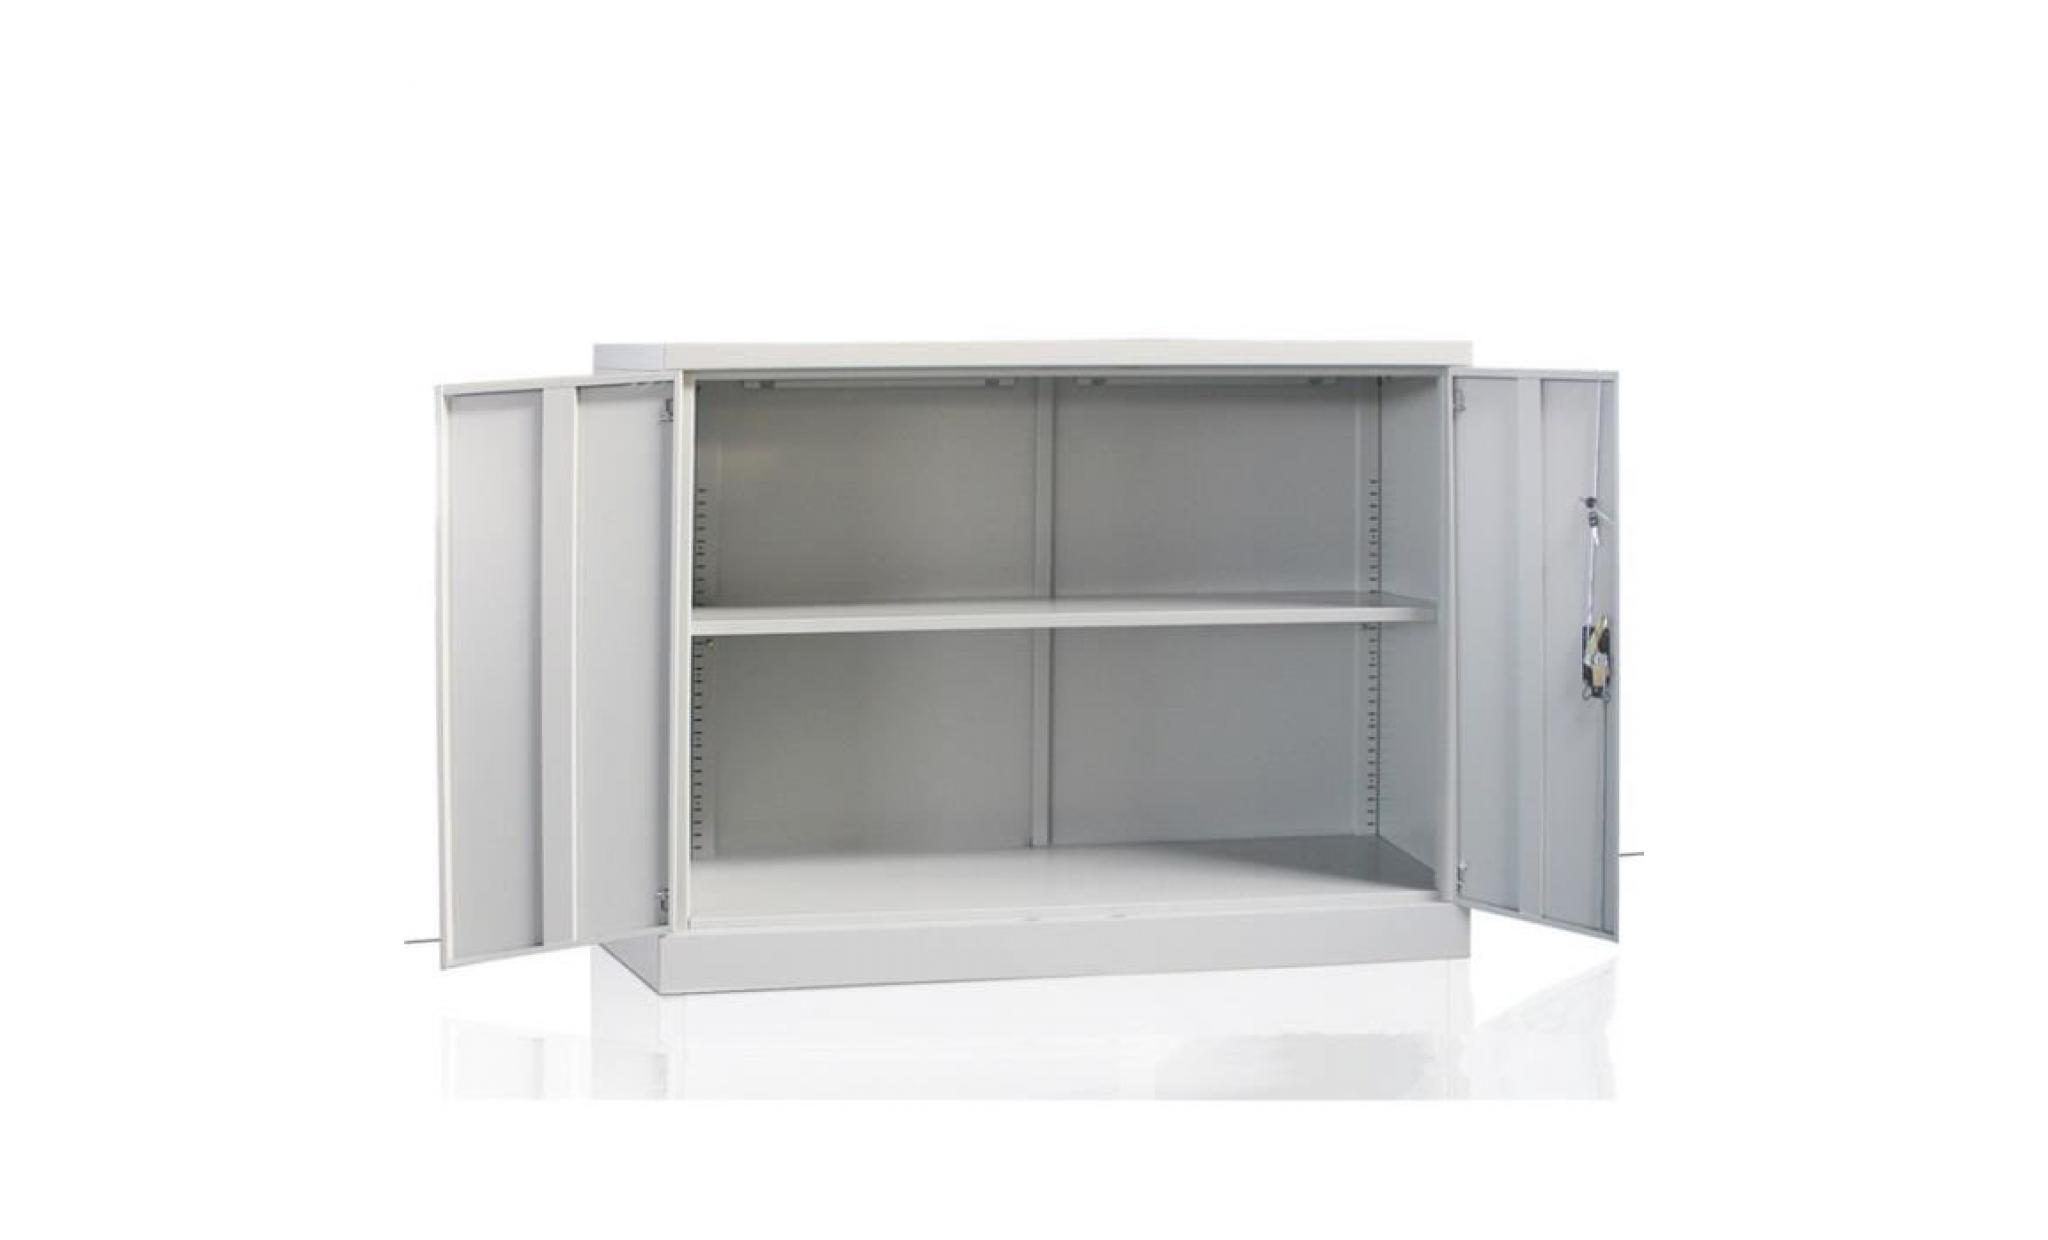 mmt steel metal office storage 2 door bookcase filing cabinet, desk height extension   73cm tall, grey pas cher